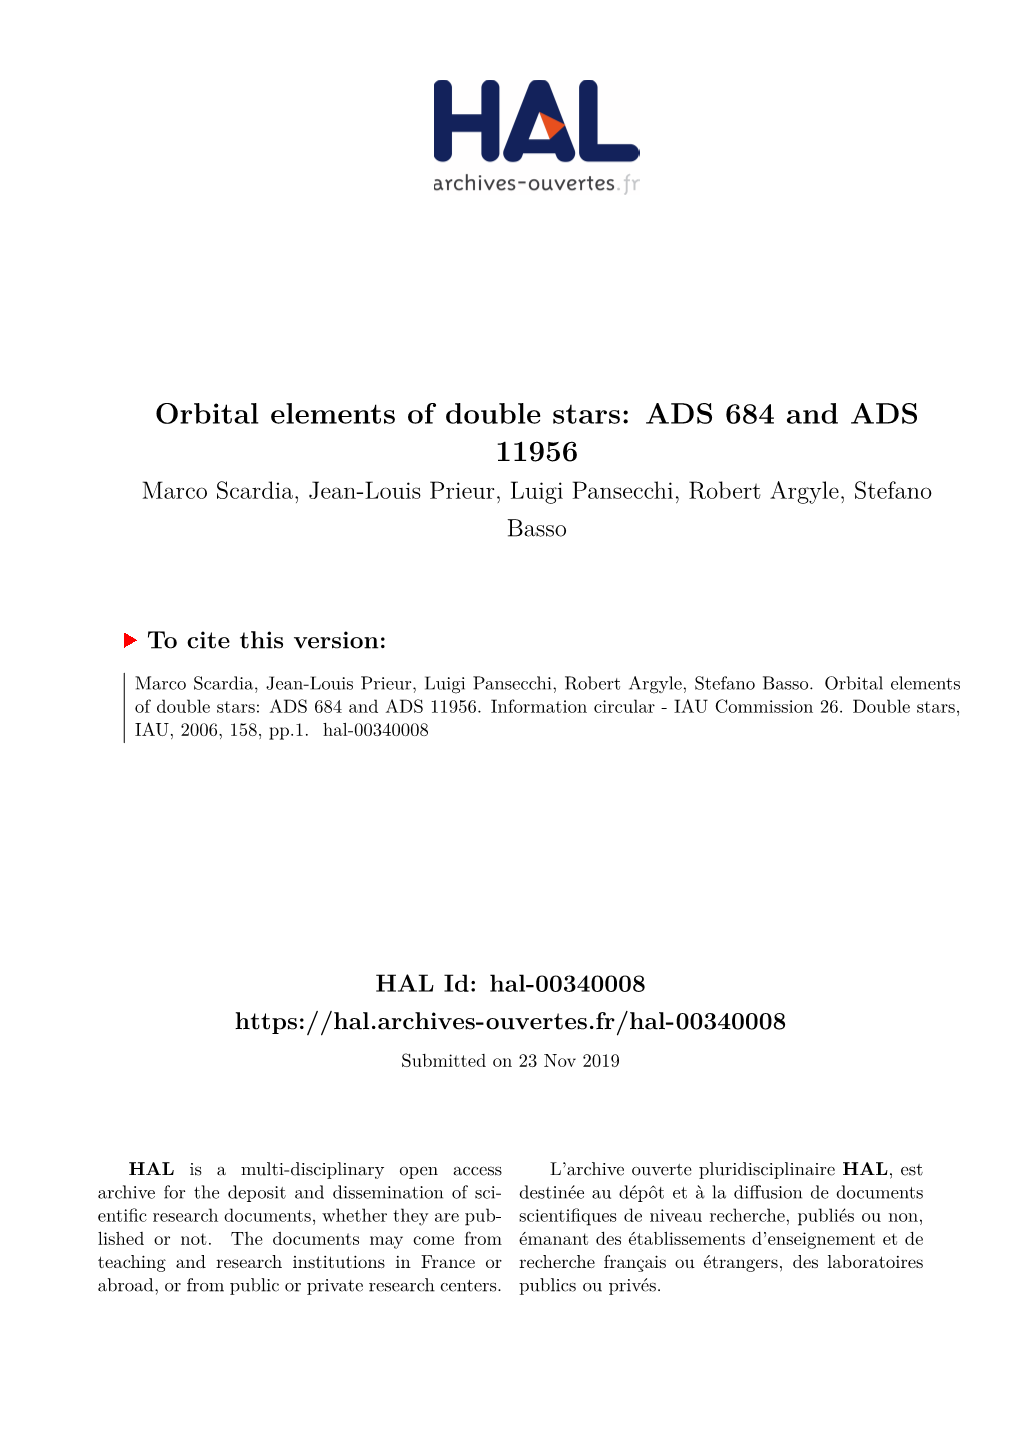 Orbital Elements of Double Stars: ADS 684 and ADS 11956 Marco Scardia, Jean-Louis Prieur, Luigi Pansecchi, Robert Argyle, Stefano Basso